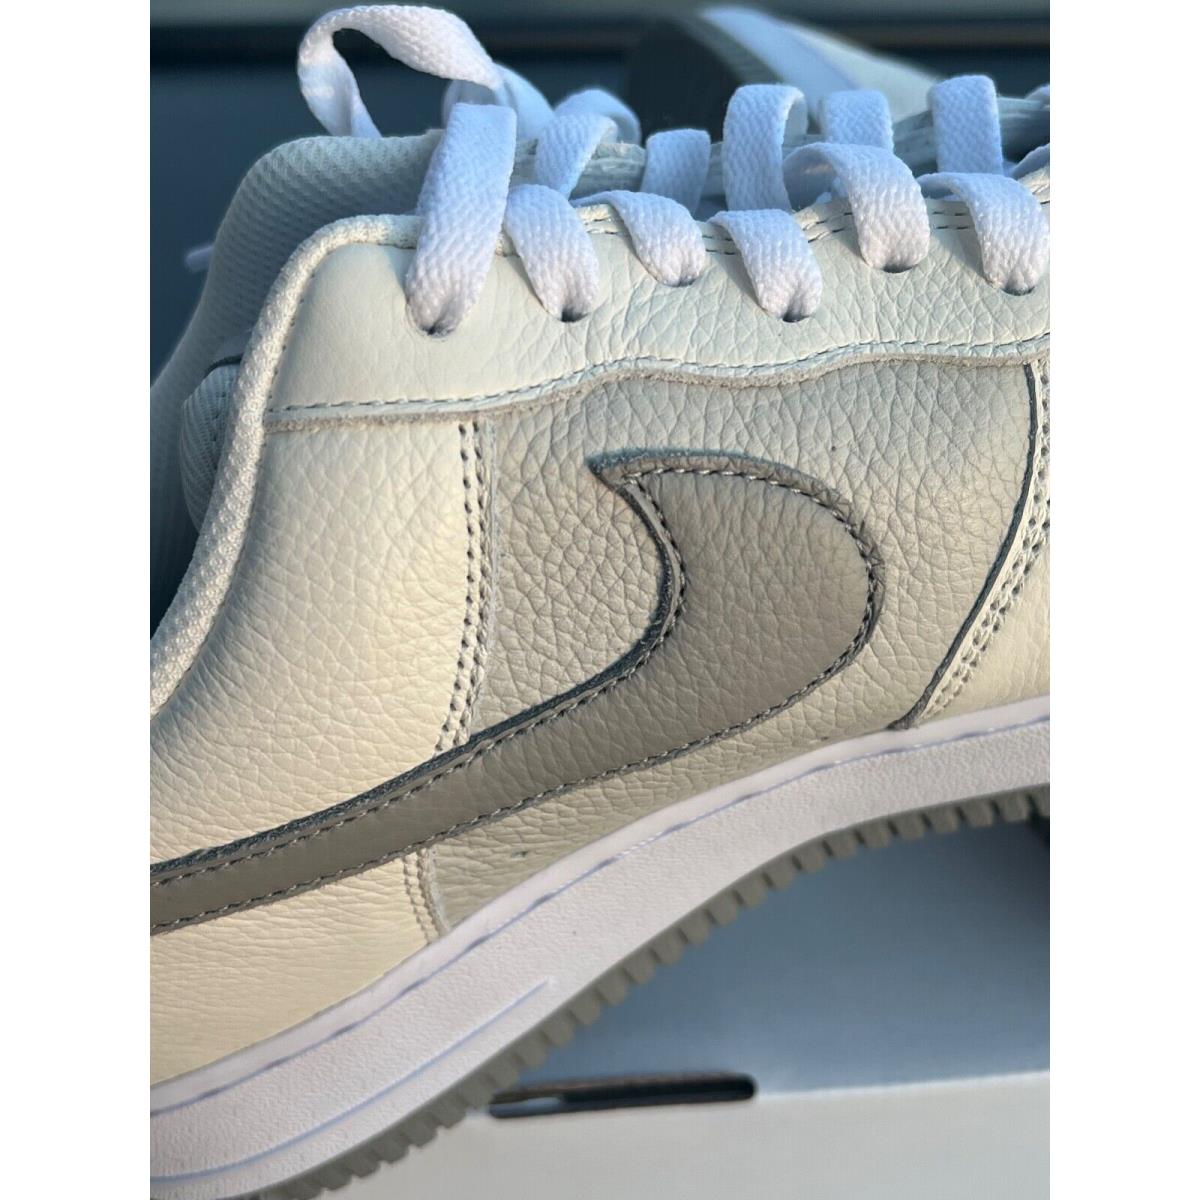 Nike By ID Air Force 1 Sneaker Grey White Cream Mens 11 Wom 12.5 | 883212300010 - Nike shoes Force Low - Grey, White, Cream |